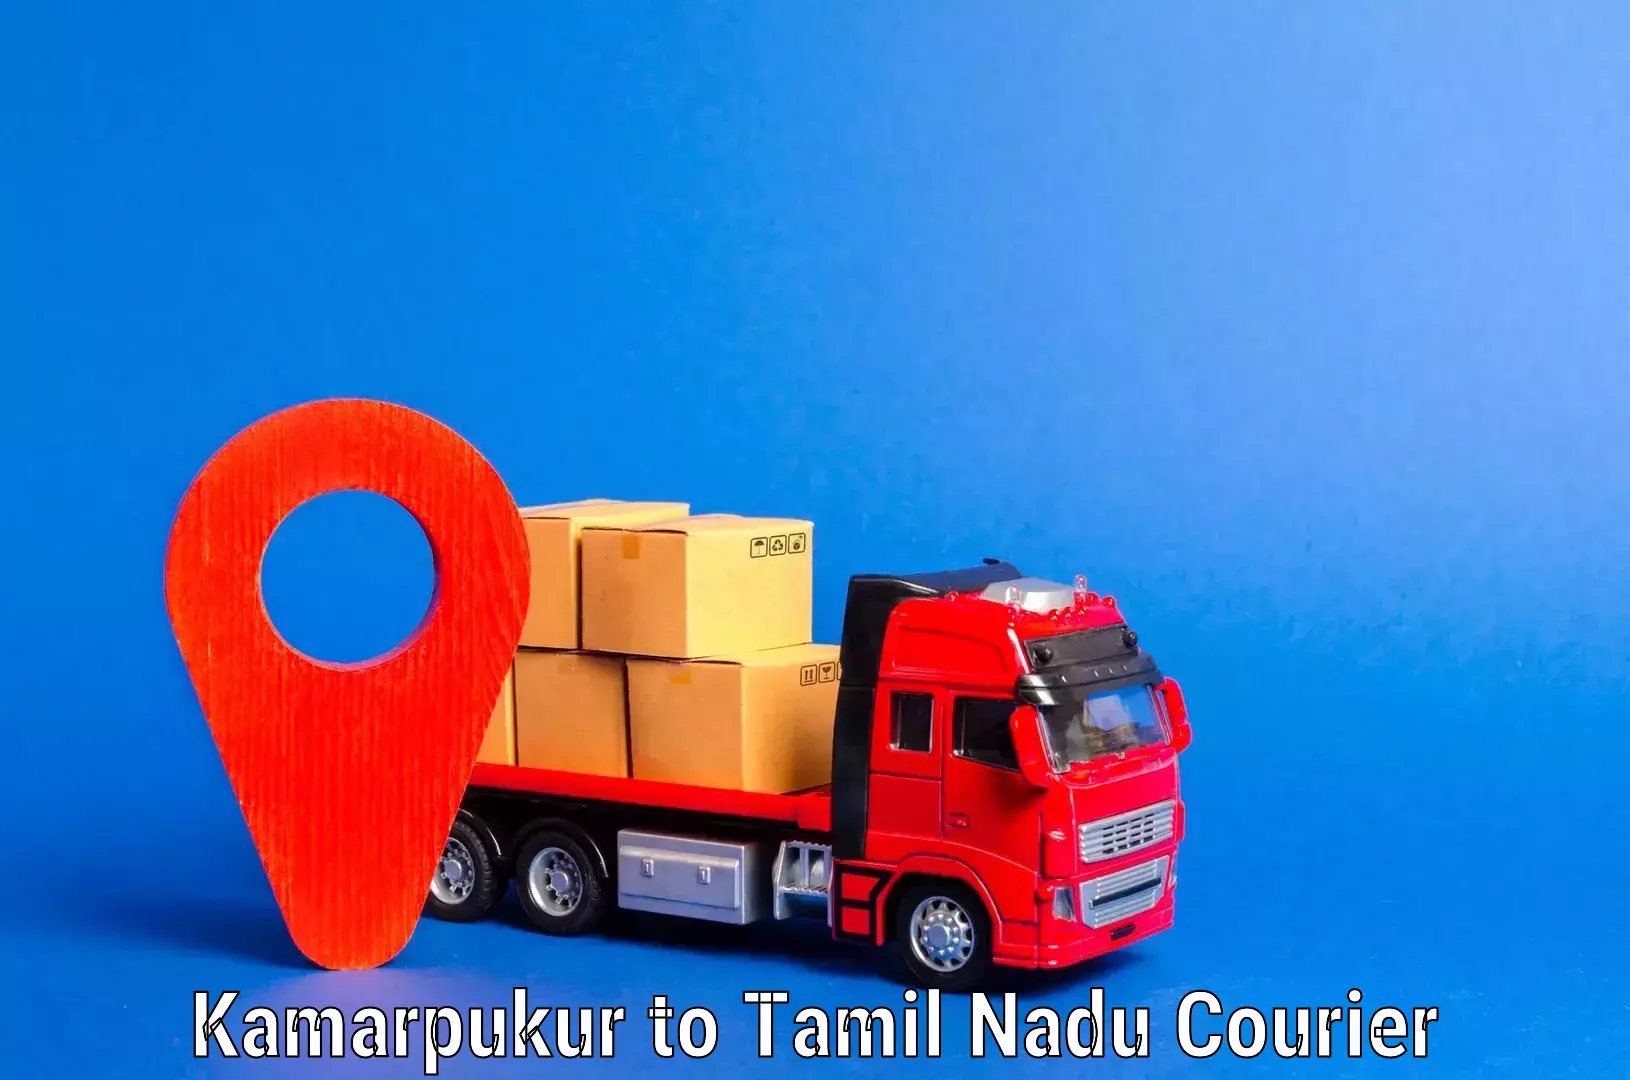 Furniture transport experts Kamarpukur to Tamil Nadu